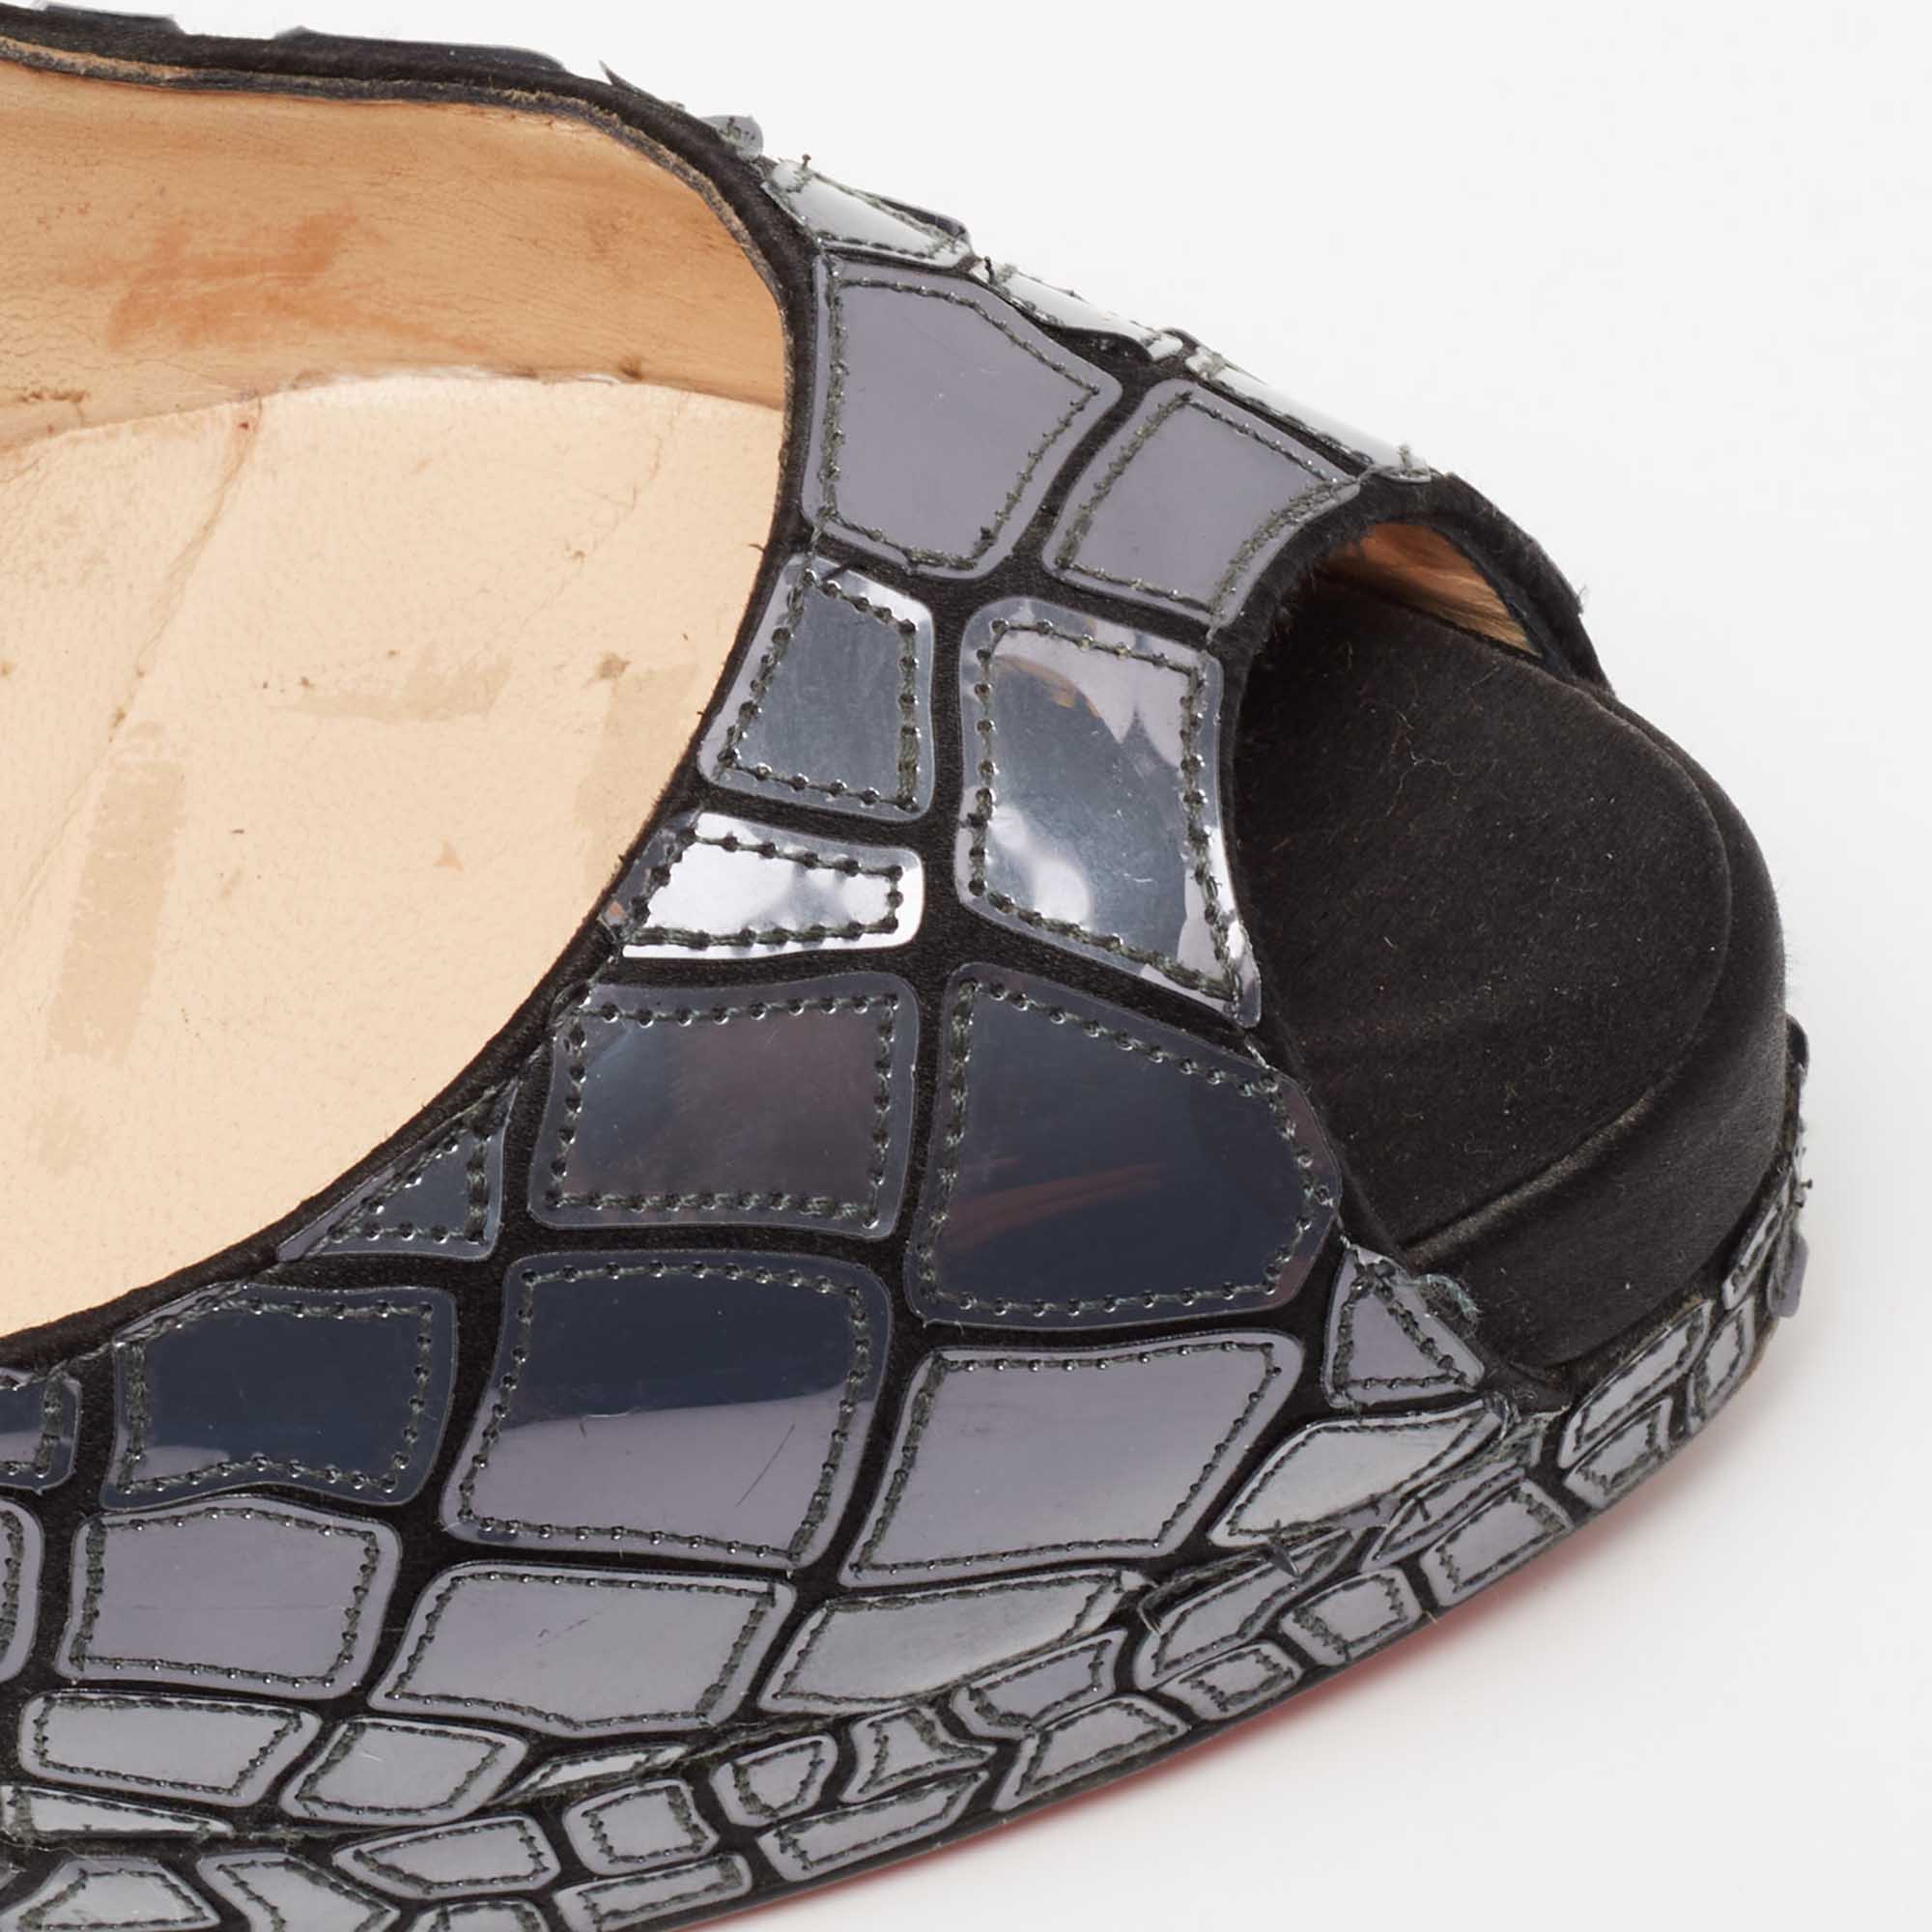 Christian Louboutin Slate Grey/Black Patent Leather And Satin Mosaic Sobek Peep-Toe Platform Pumps Size 39